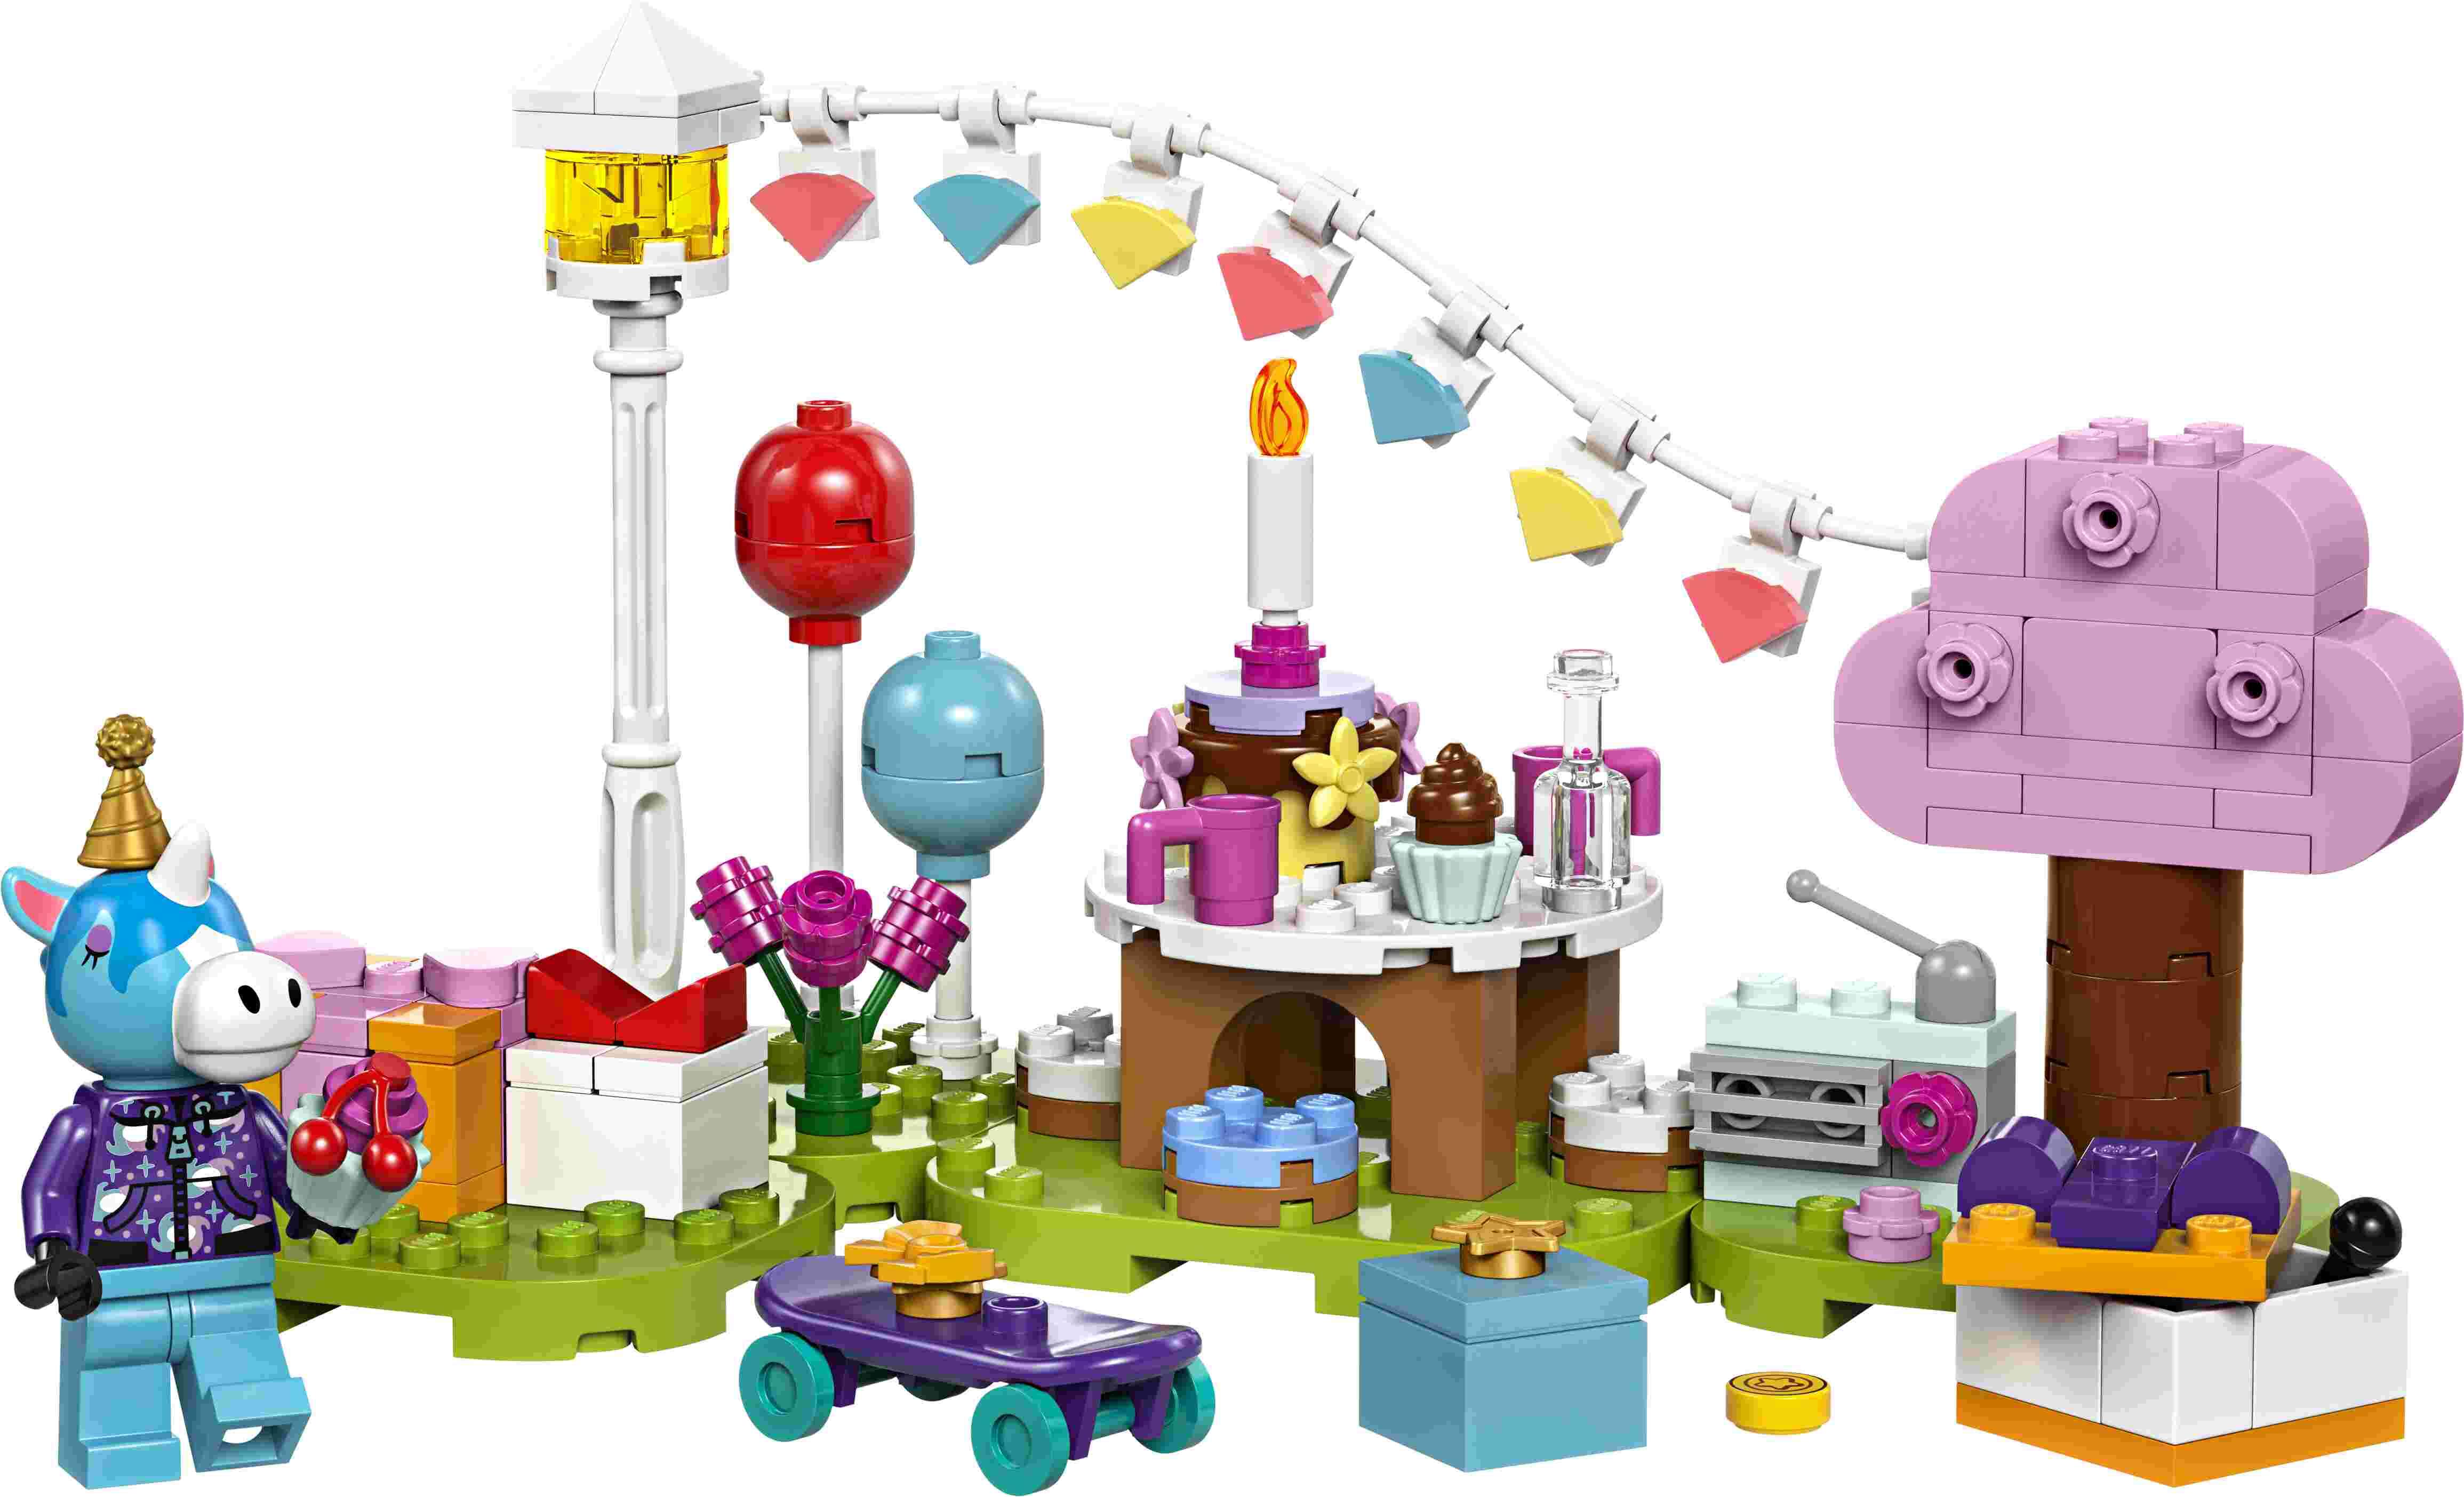 LEGO 77046 Animal Crossing Jimmys Geburtstagsparty, modulare Bauplatten